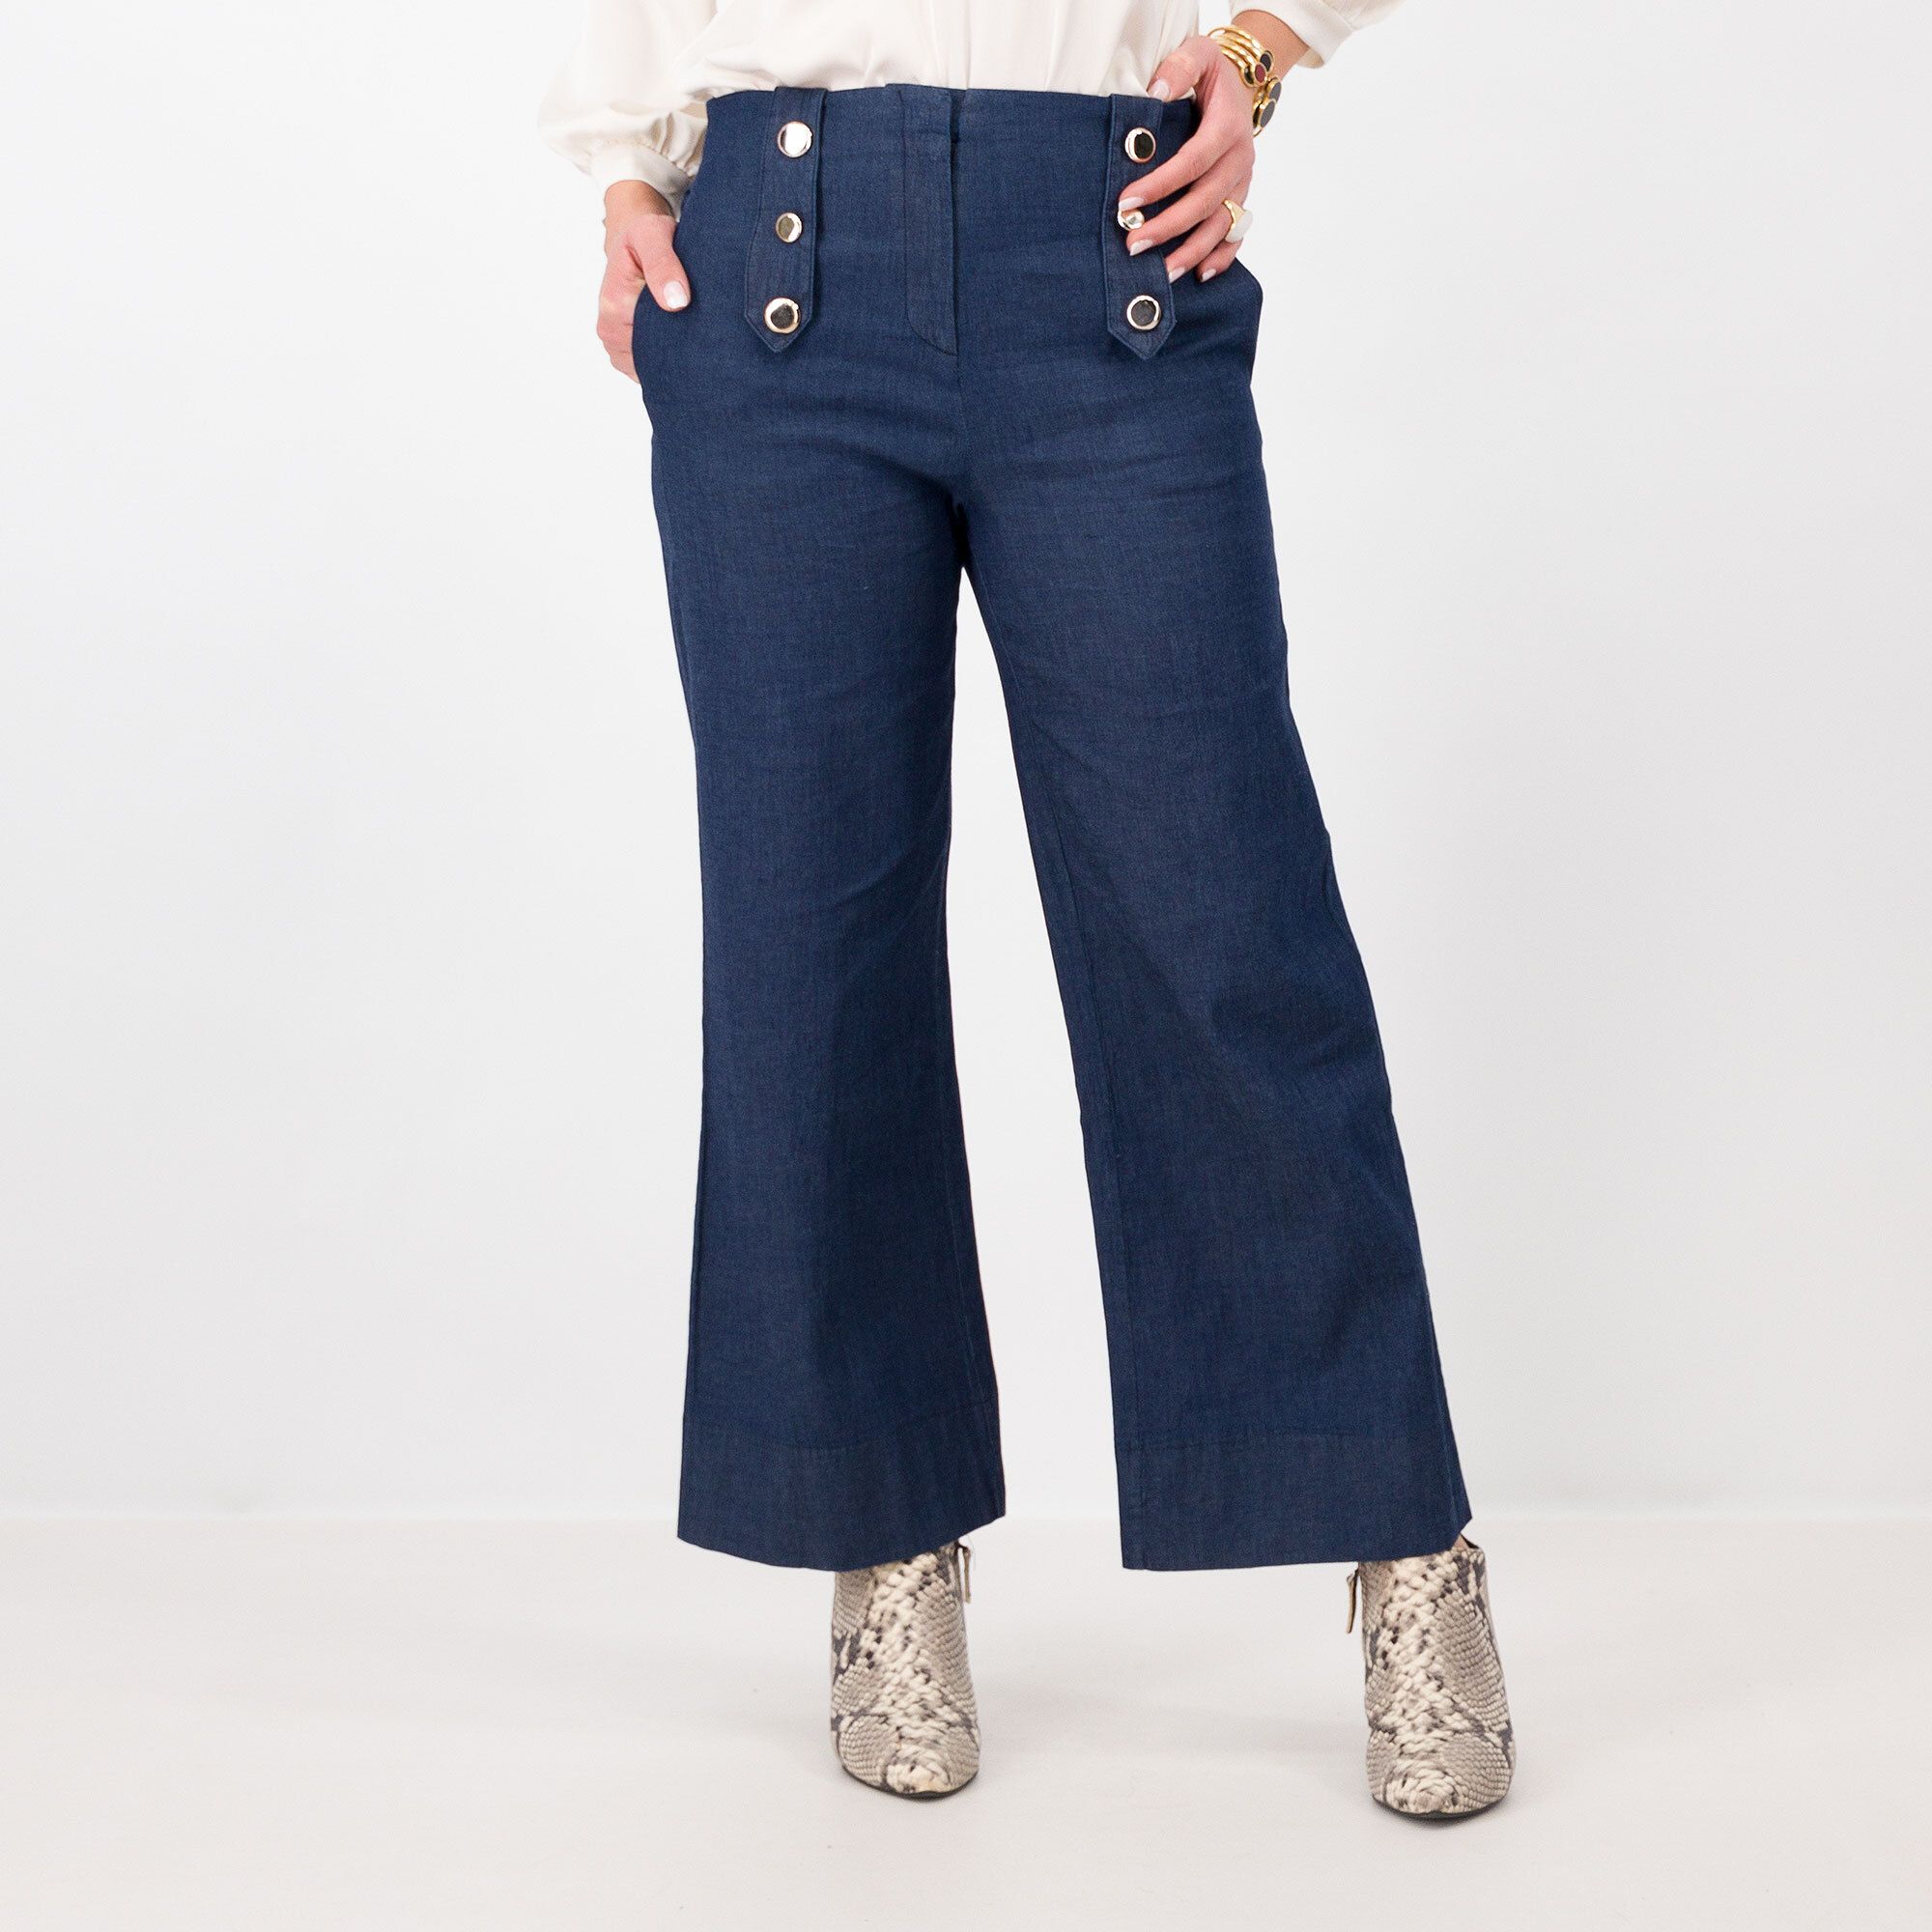 Image of Pantaloni gamba ampia effetto jeans con bottoni